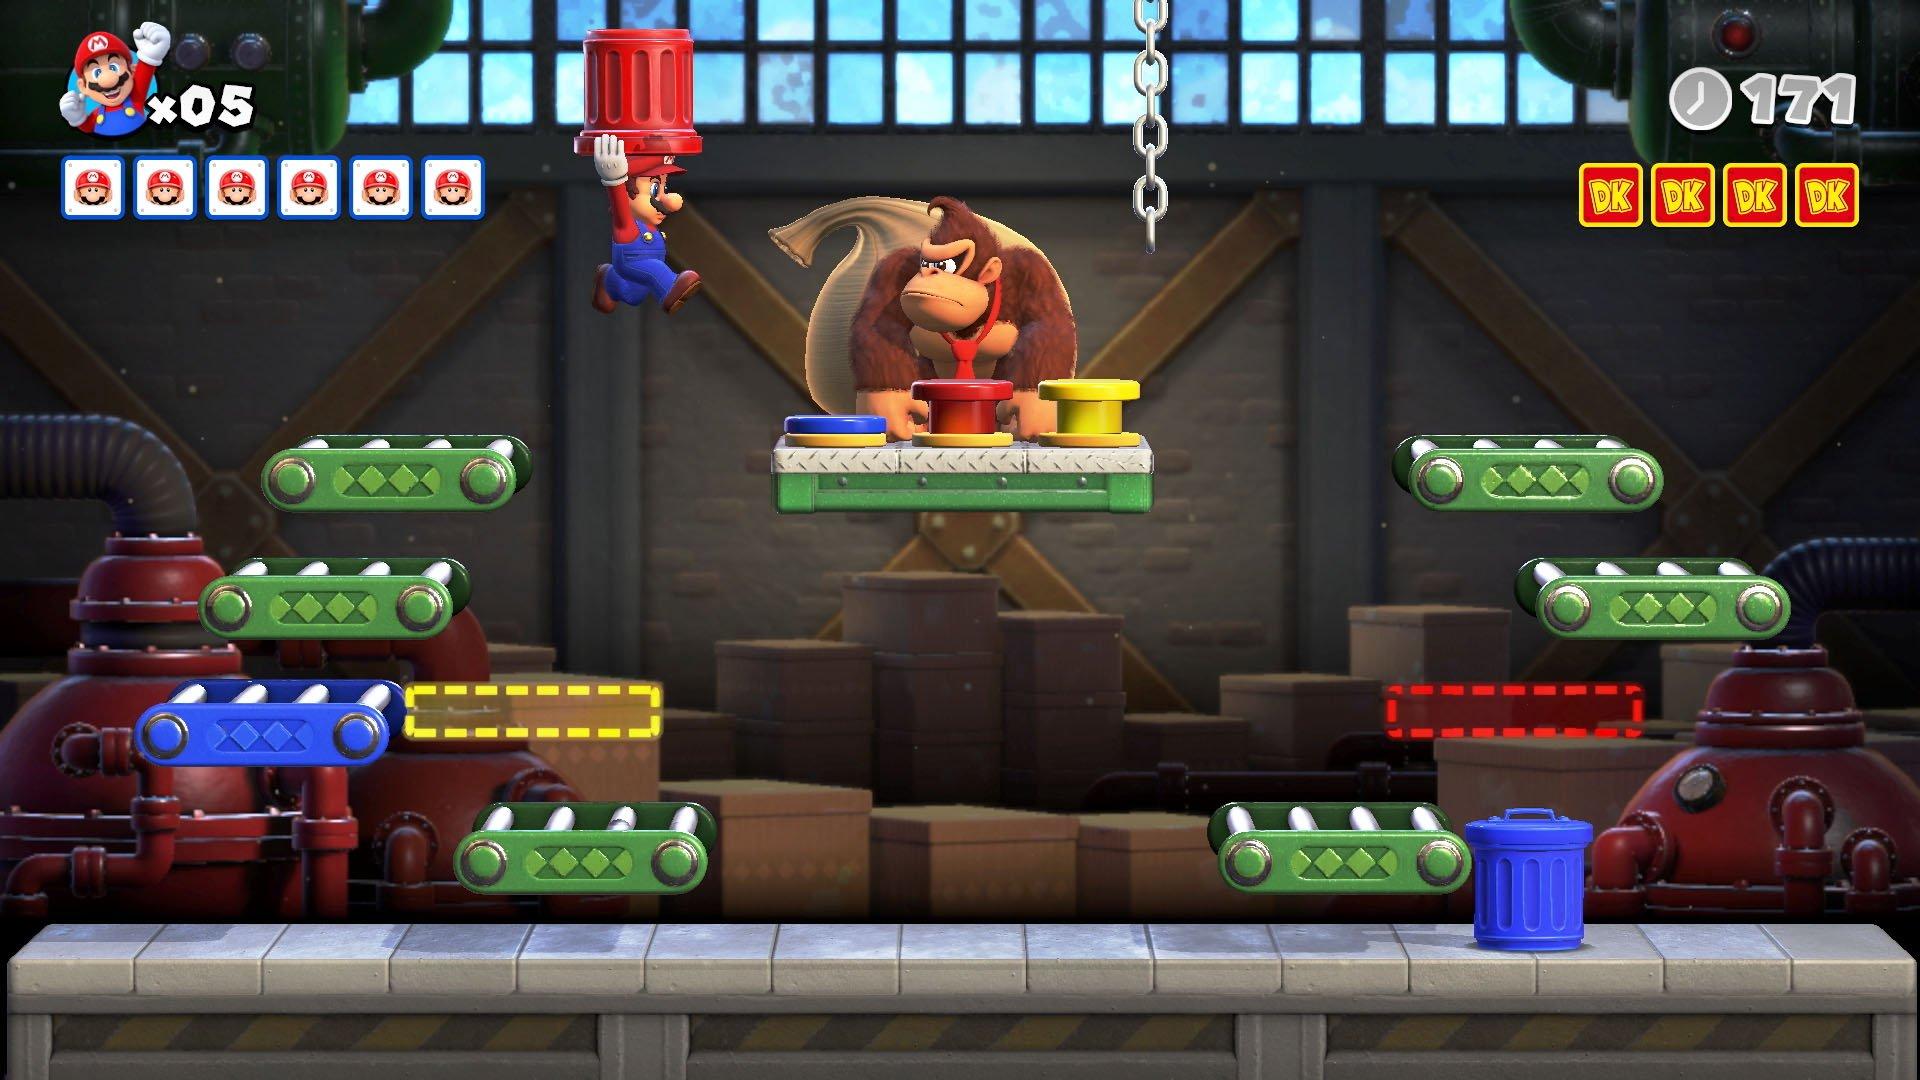 ▷ Reserva Mario vs. Donkey Kong para Nintendo Switch por sólo 39